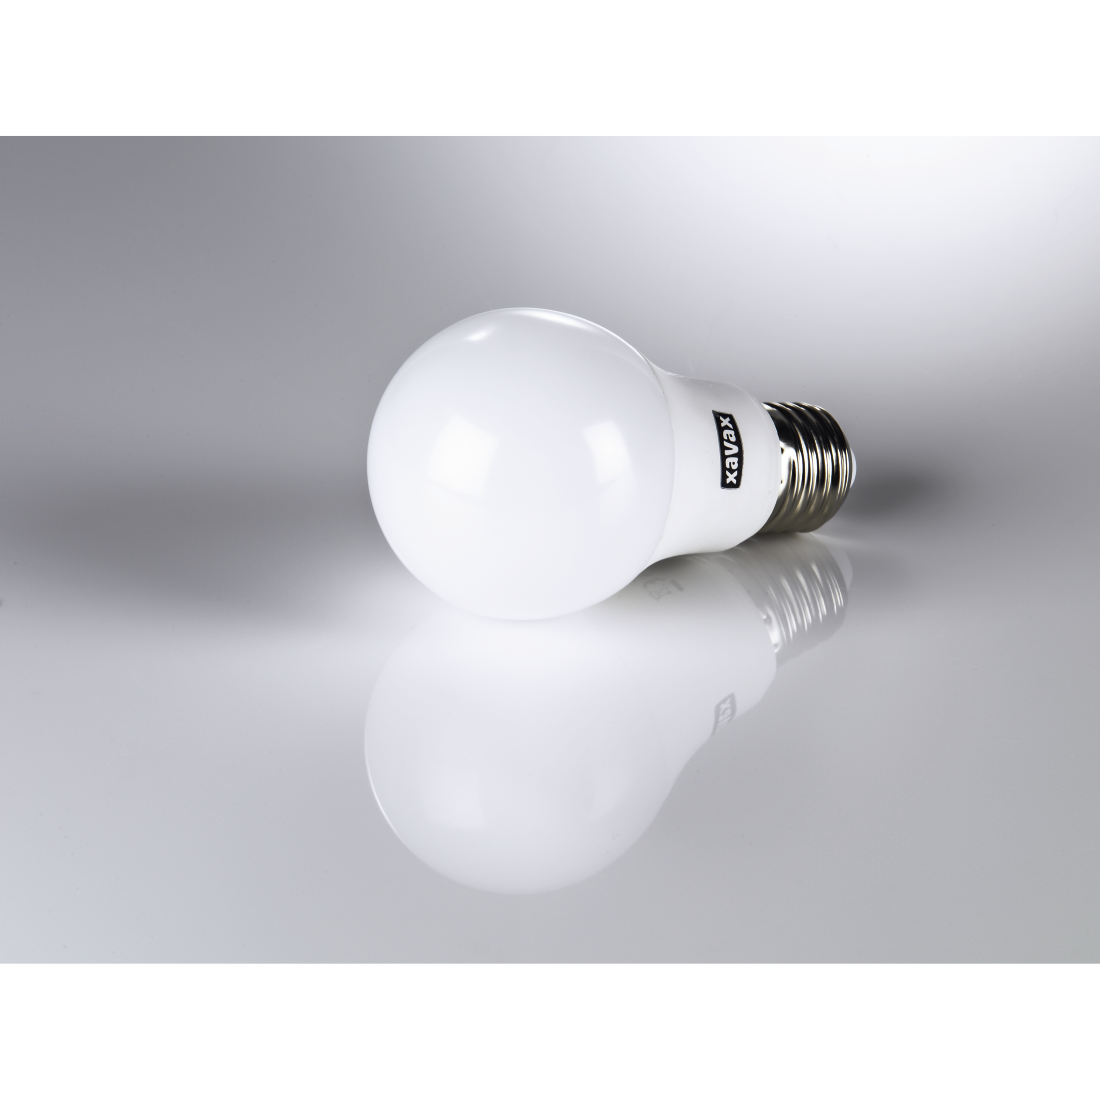 abx3 Druckfähige Abbildung 3 - Xavax, LED-Lampe, E27, 806 lm ersetzt 60W, Glühlampe, Warmweiß, 3-Stufen-dimmbar